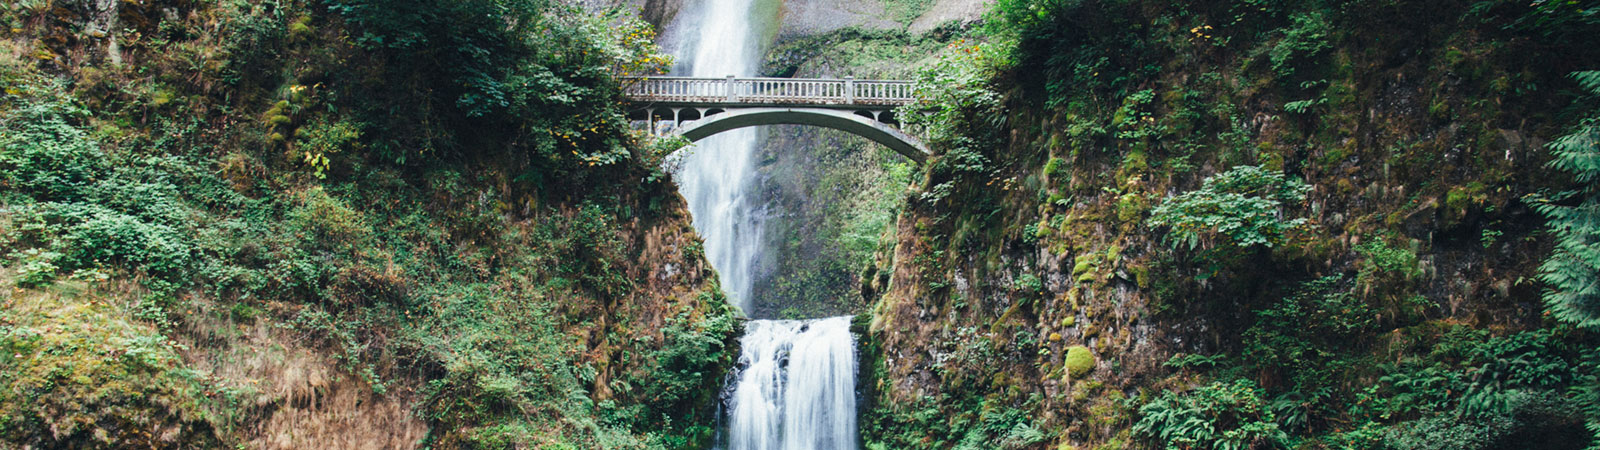 photo of multnomah falls